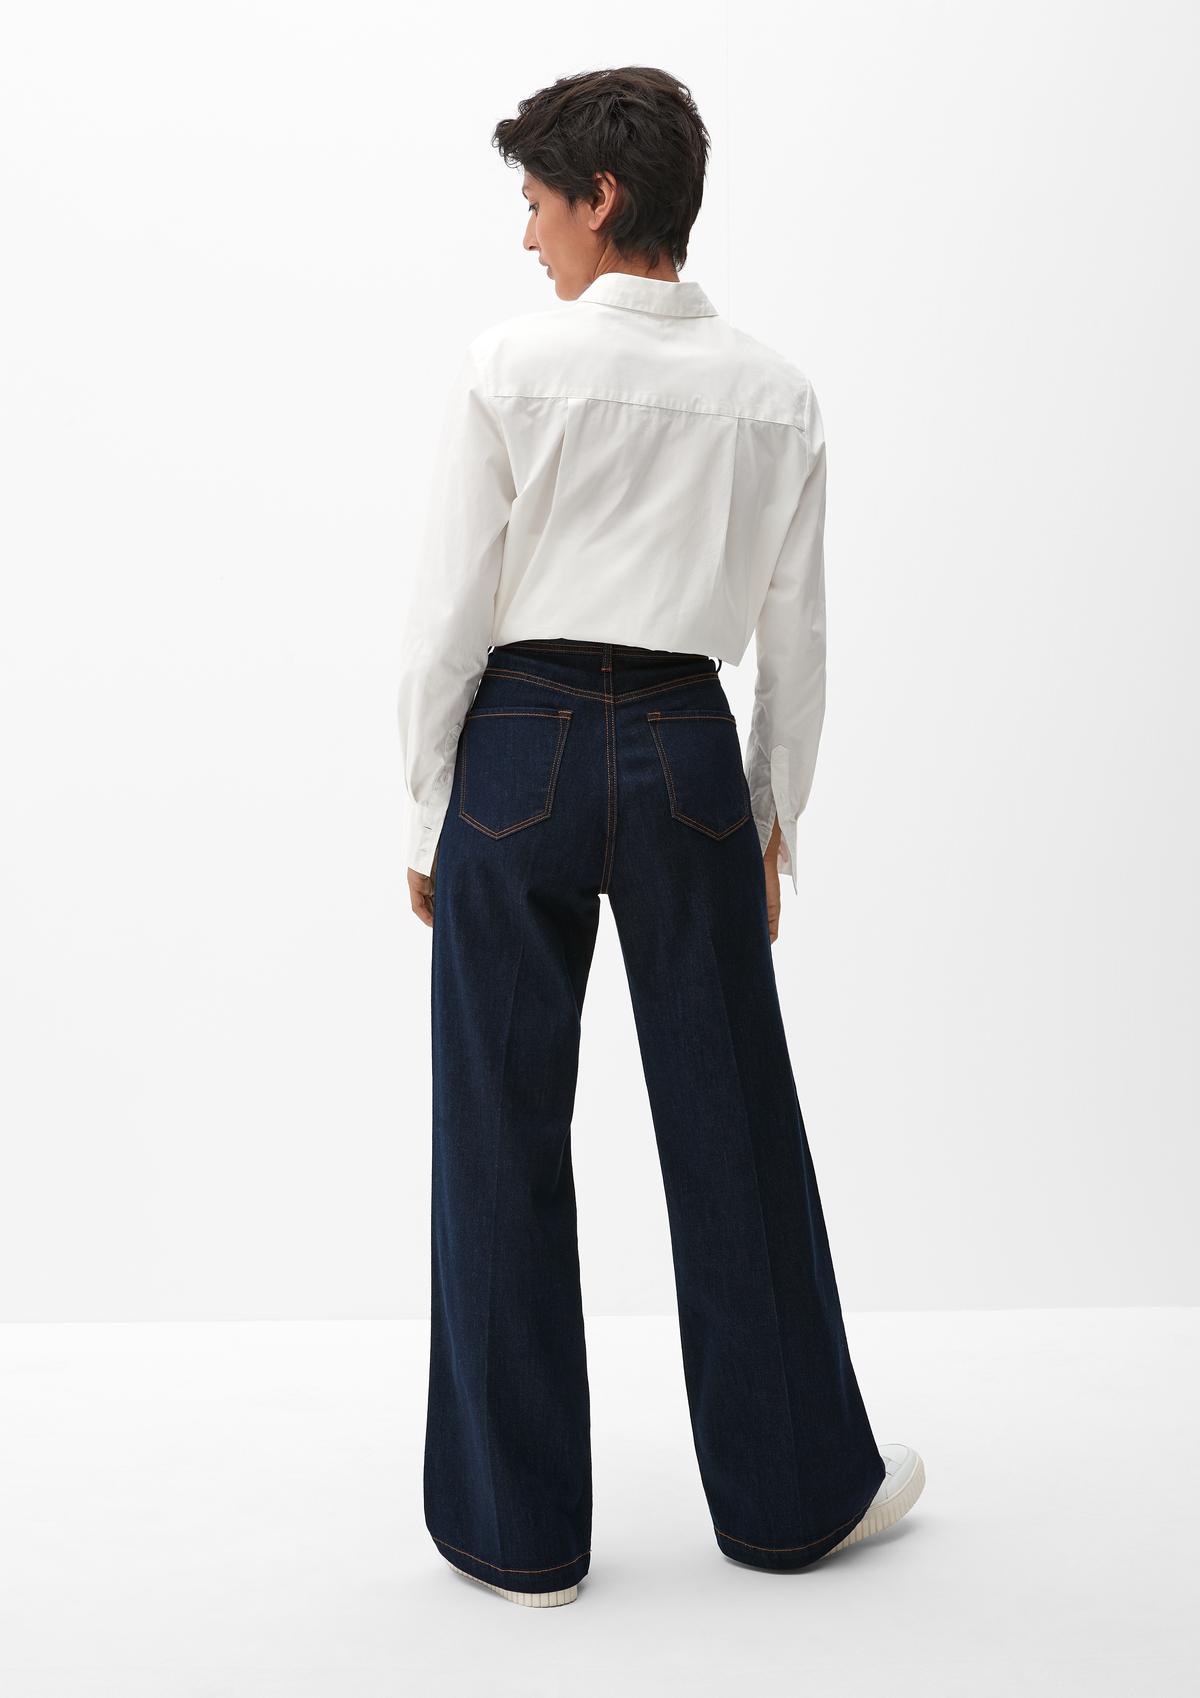 s.Oliver Regular: jeans hlače s širokimi hlačnicami